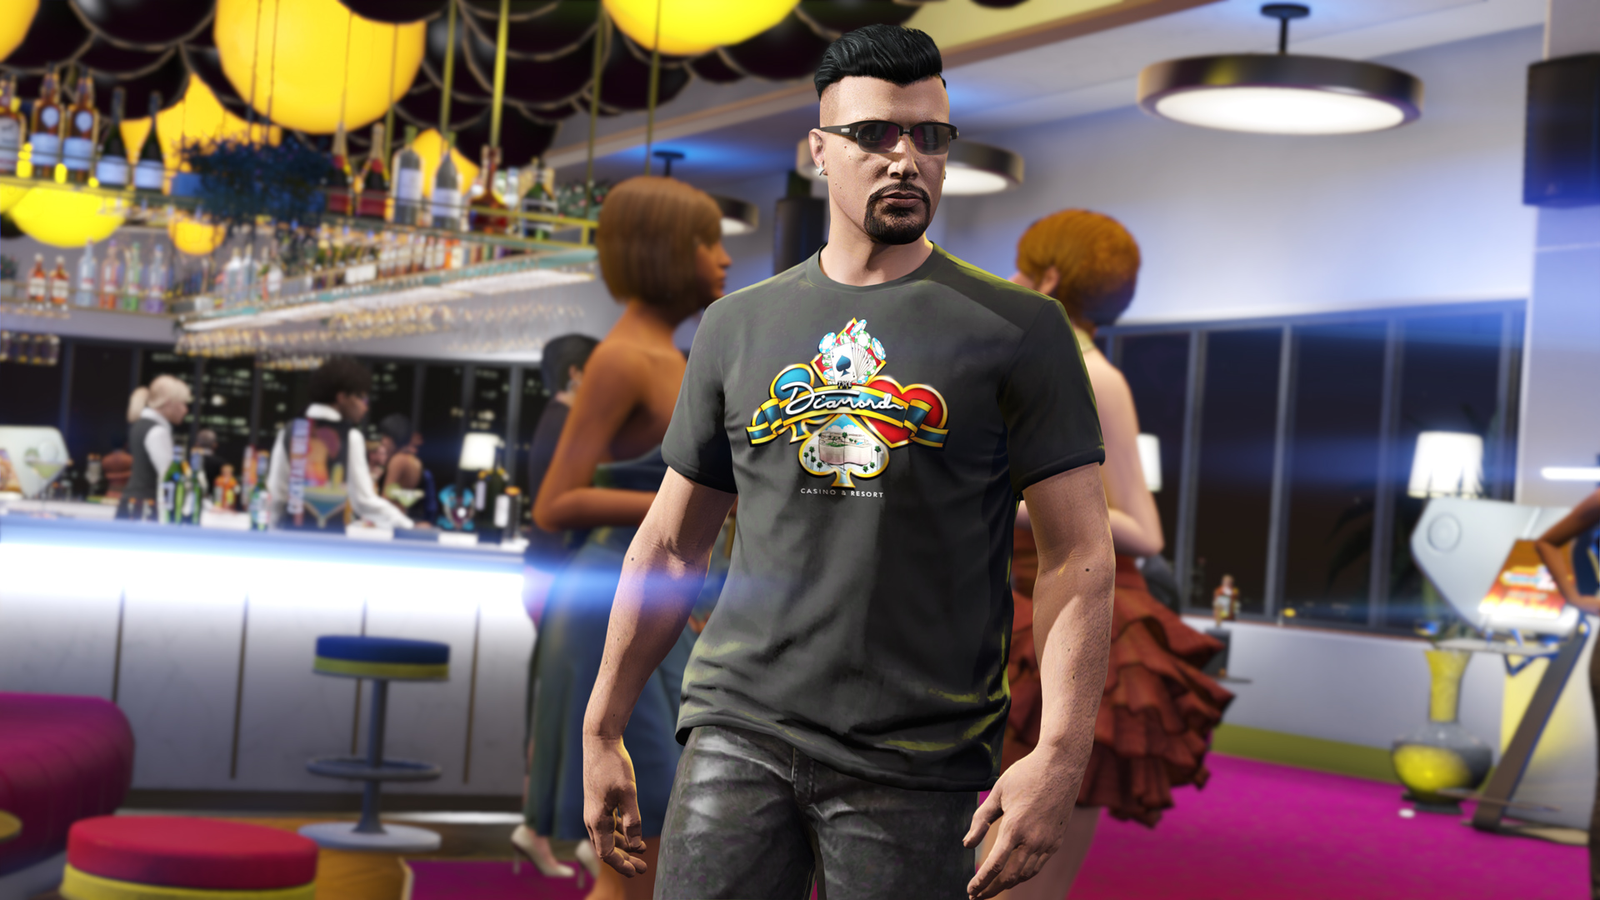 GTA Online: DLC Casino & Resort ganha trailer